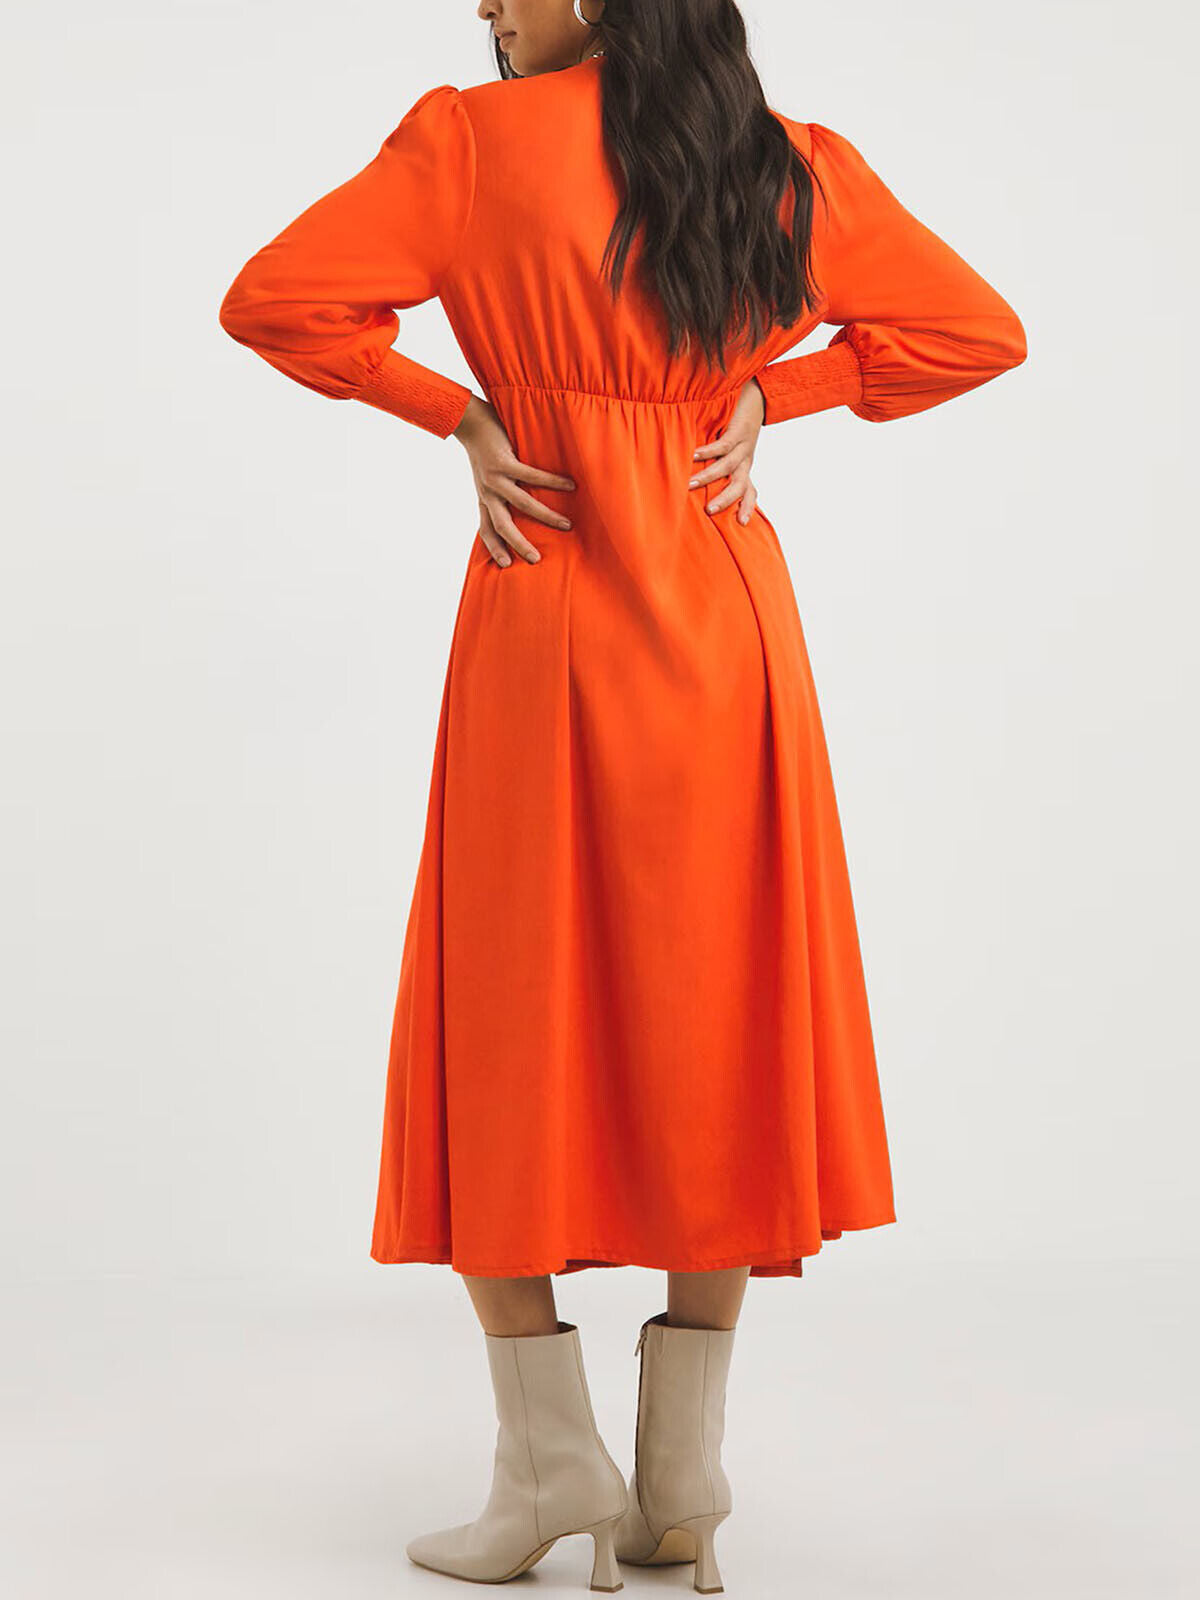 JD Williams Red Orange Asymmetric Wrap Button Tea Dress 12, 20, 24, 26, 30, 32